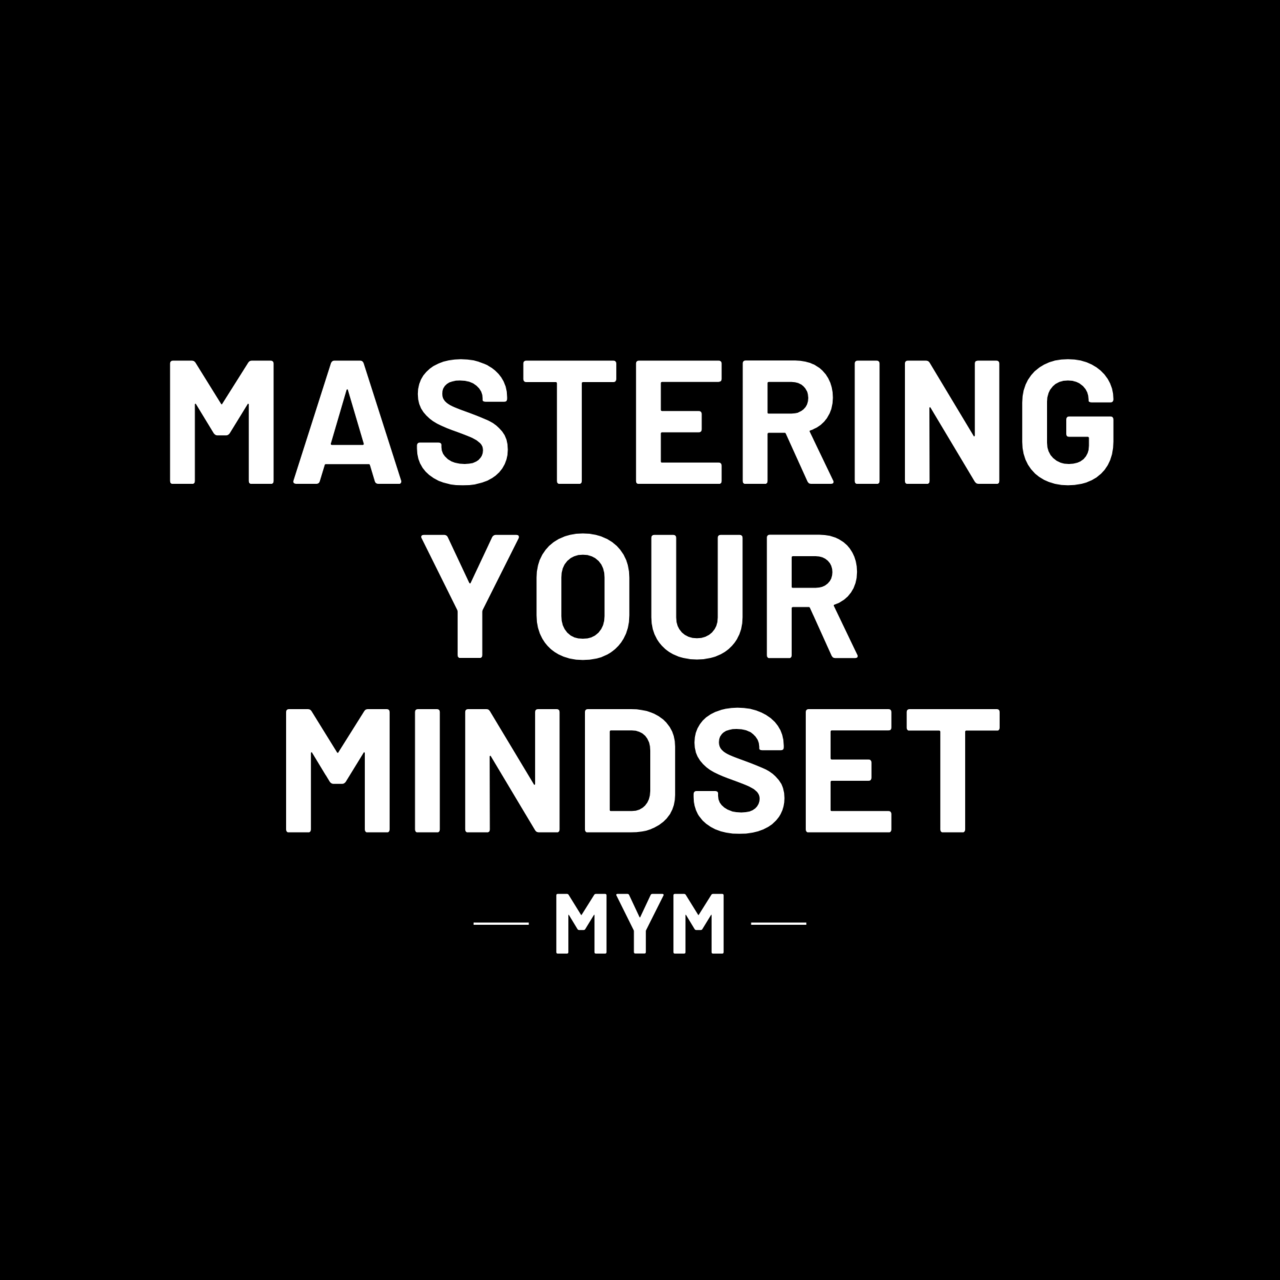 Mastering Your Mindset